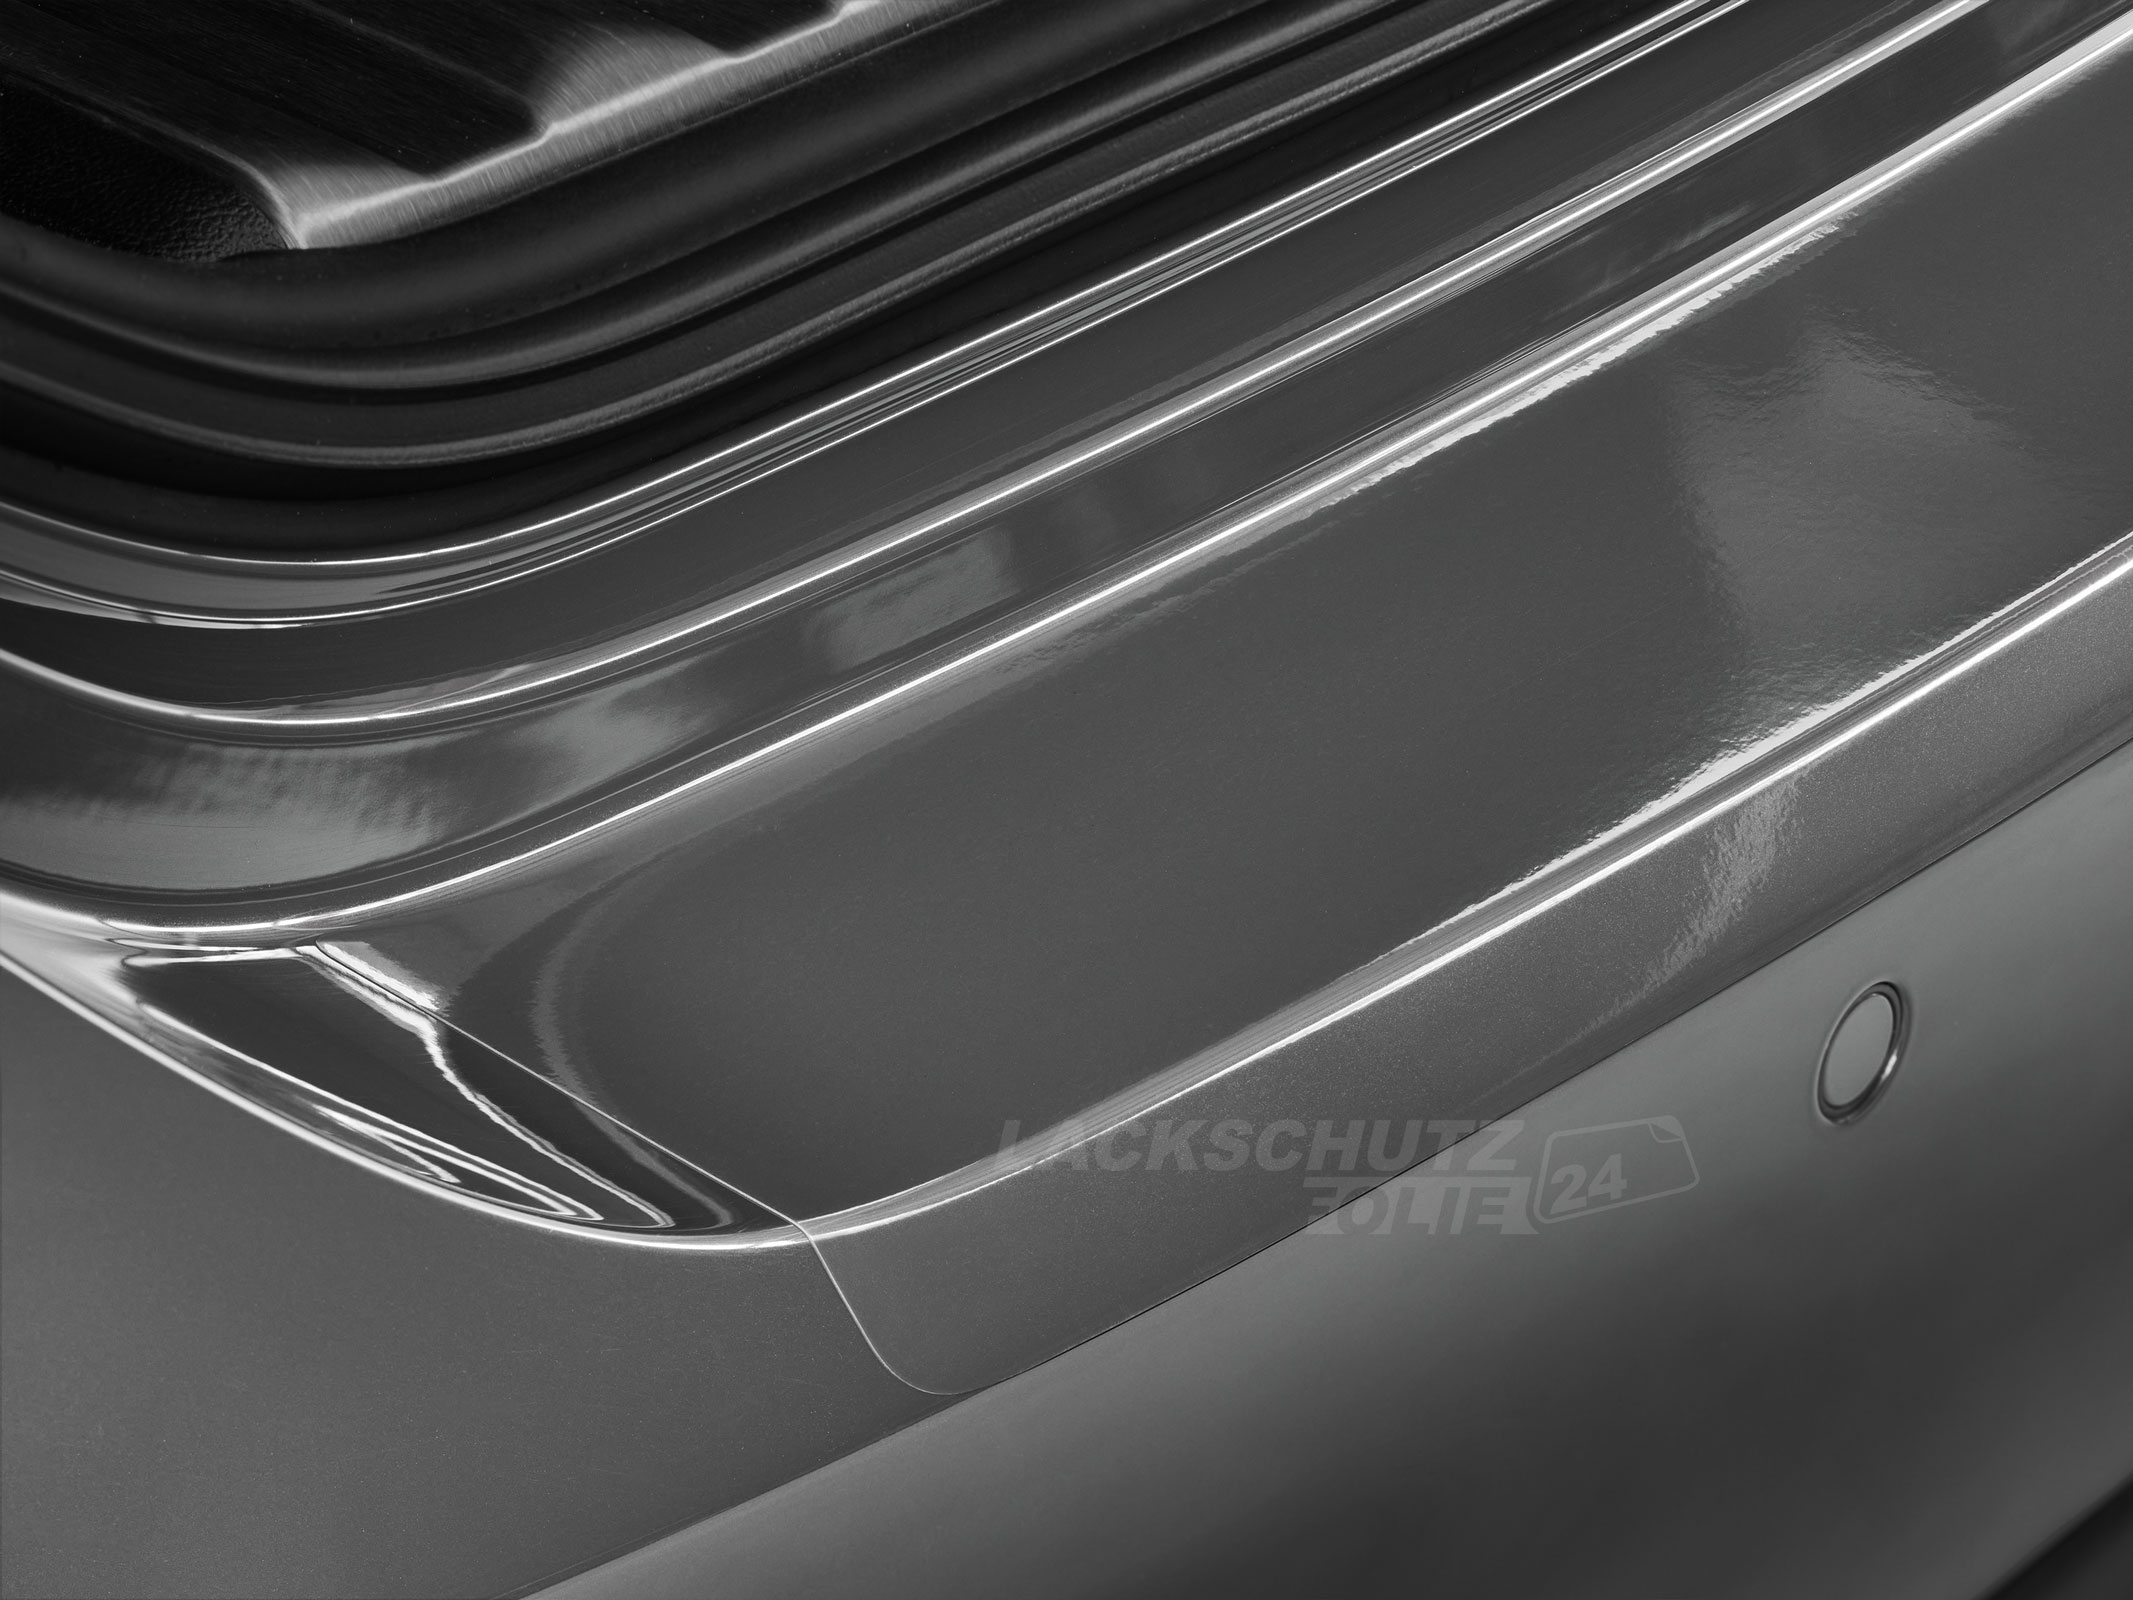 Ladekantenschutzfolie - Transparent Glatt Hochglänzend 150 µm stark für Opel Corsa  Typ C, BJ 2000-2006